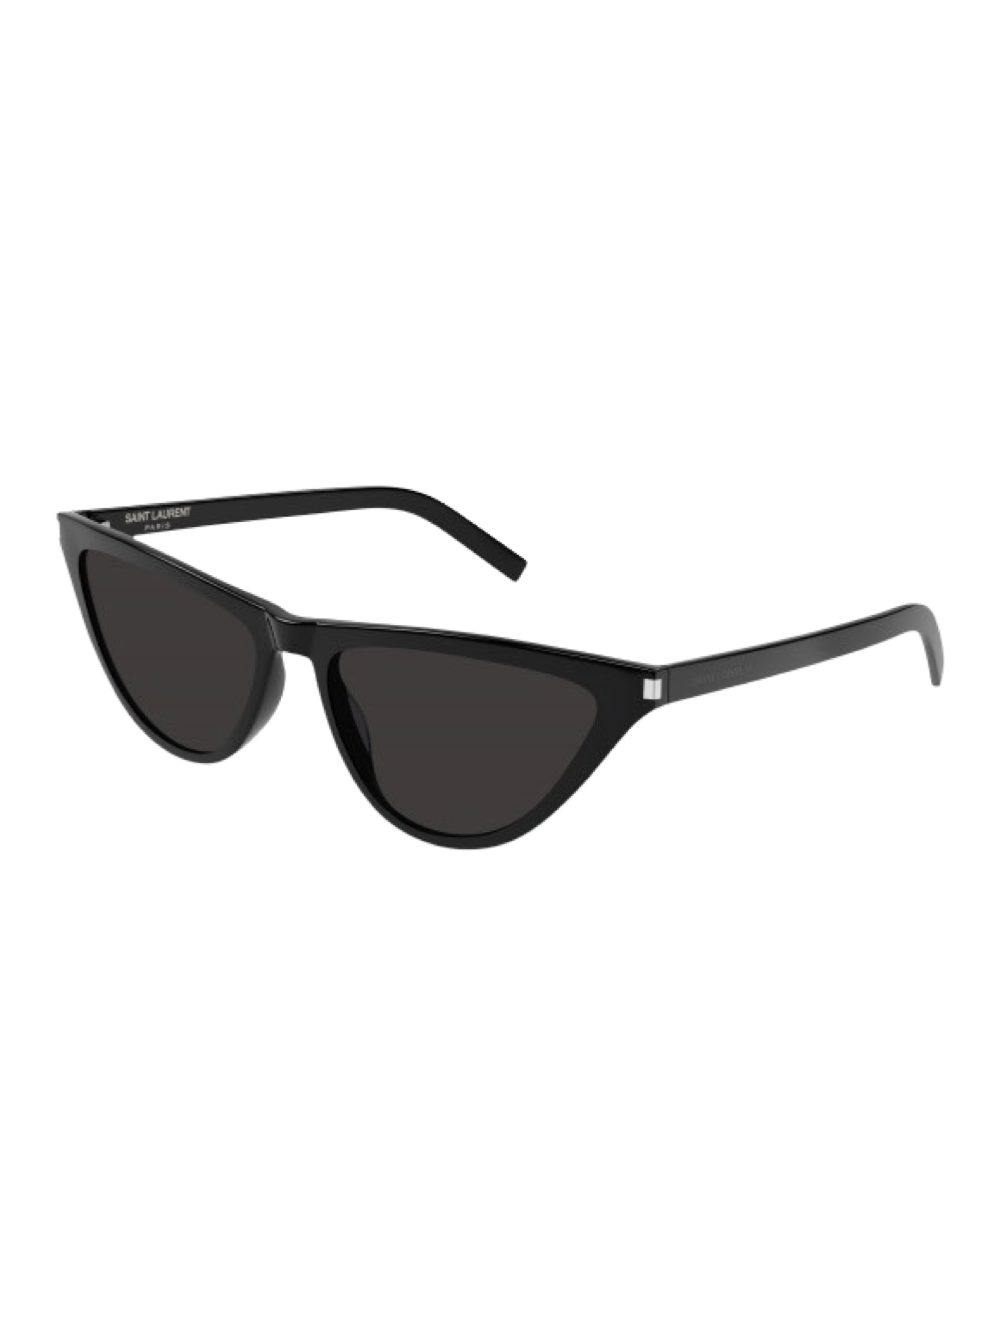 Saint Laurent Sunglasses SL 550 Slim-001